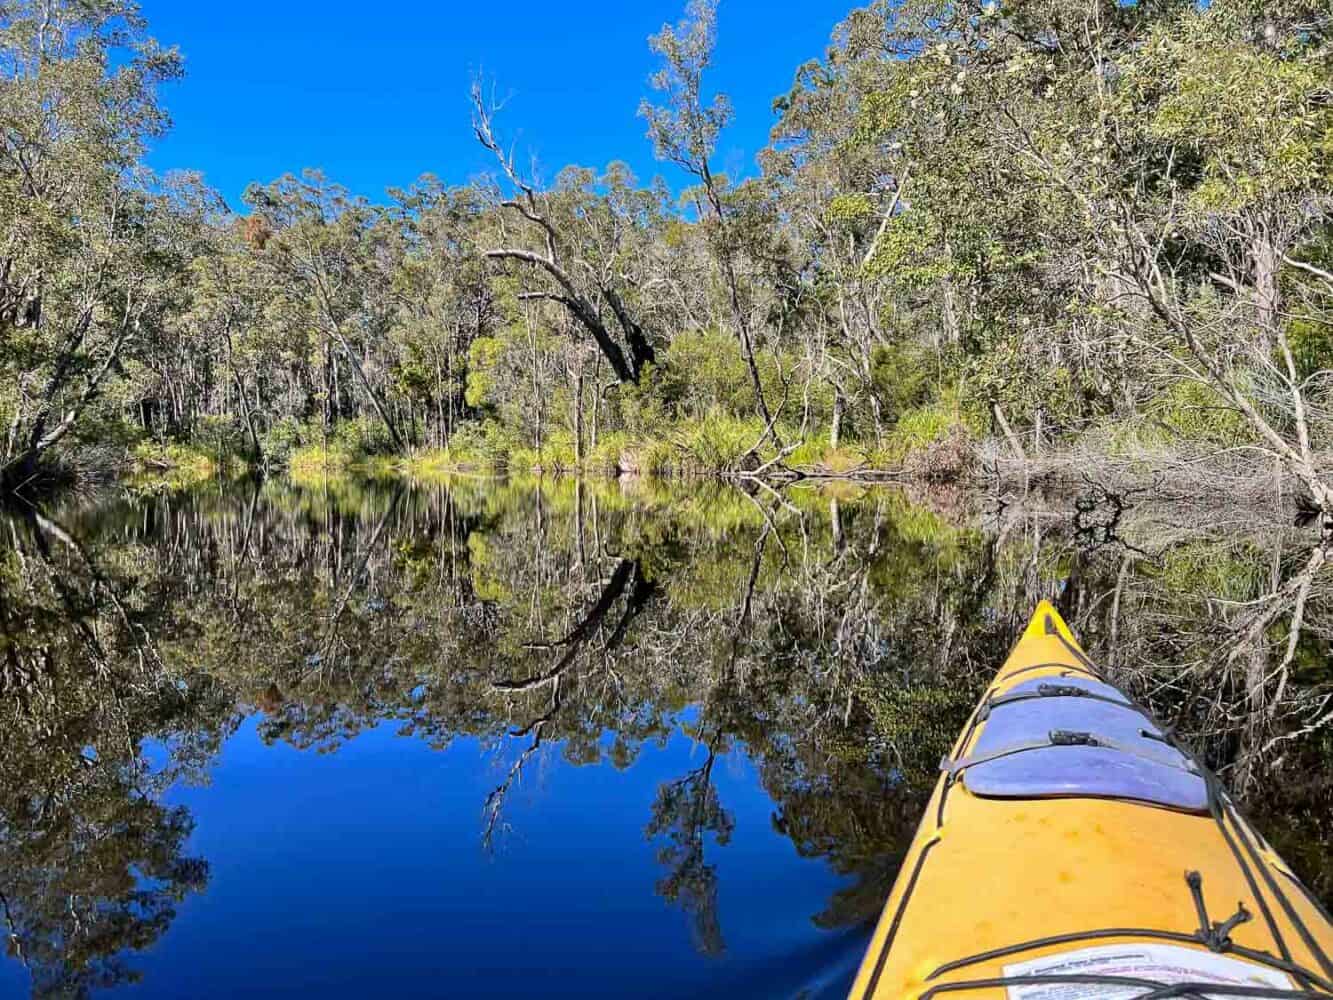 View from kayak, Noosa Everglades, Queensland, Australia